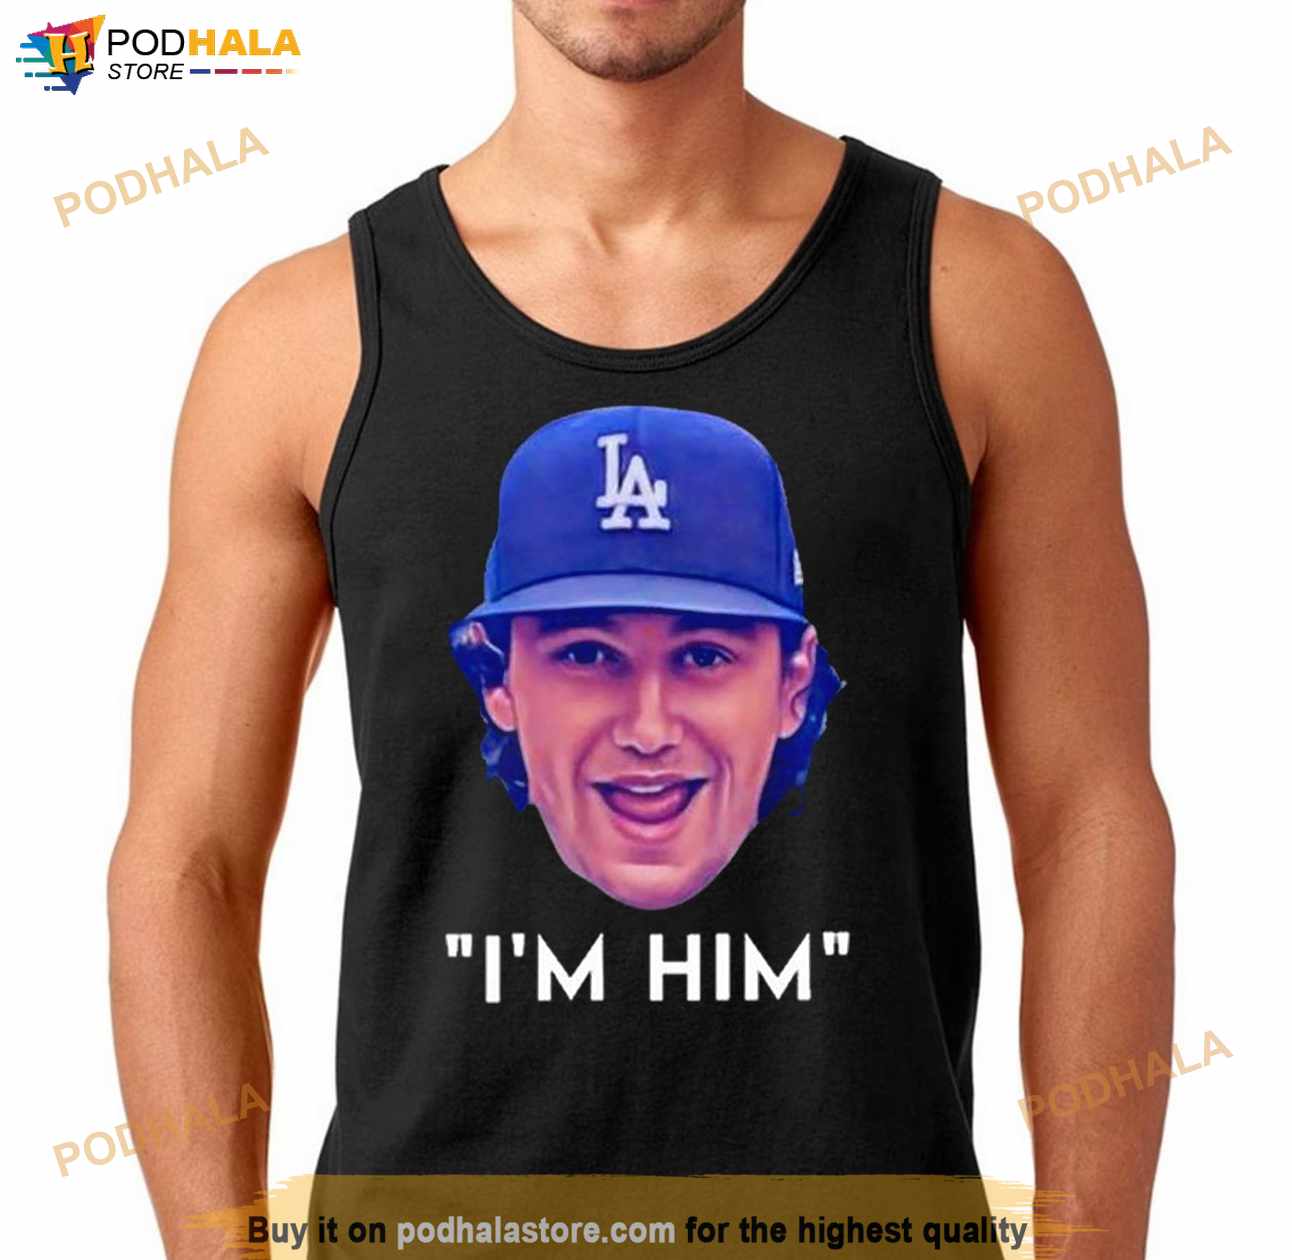 Los Angeles Dodgers Christmas ELF Funny MLB T-Shirt